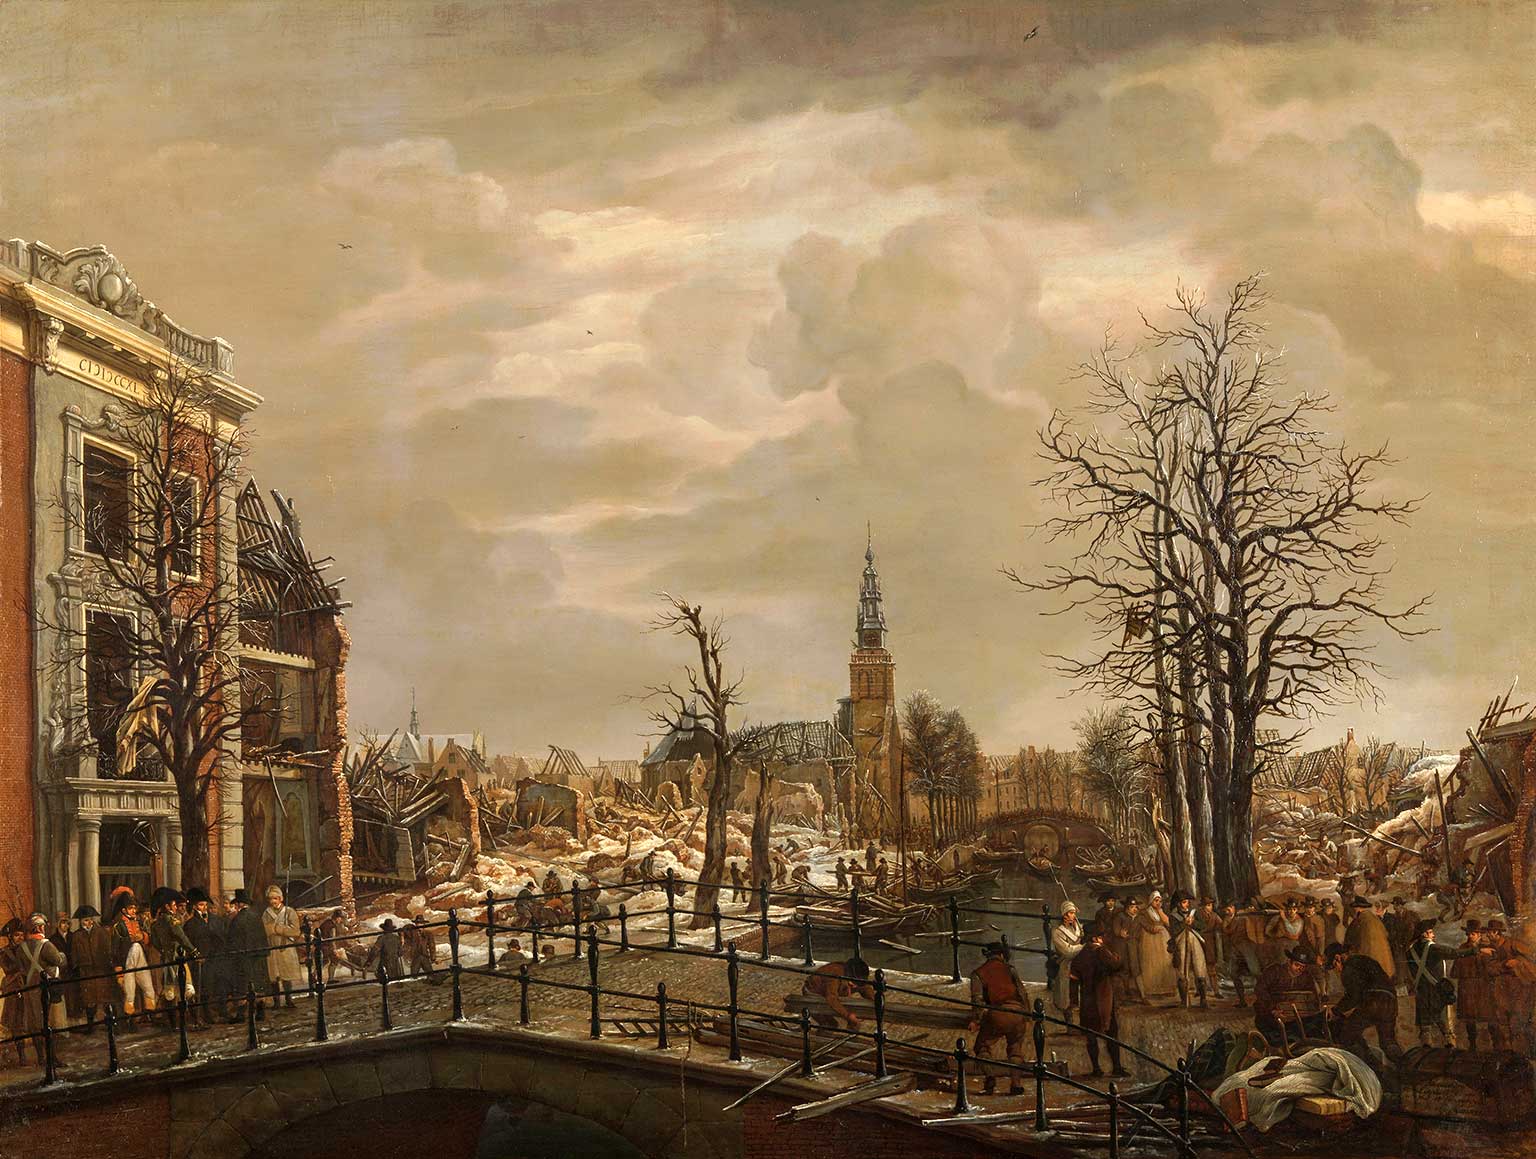 Rapenburg, Leiden, in 1807 after the gun powder ship explosion, painting by Carel Lodewijk Hansen